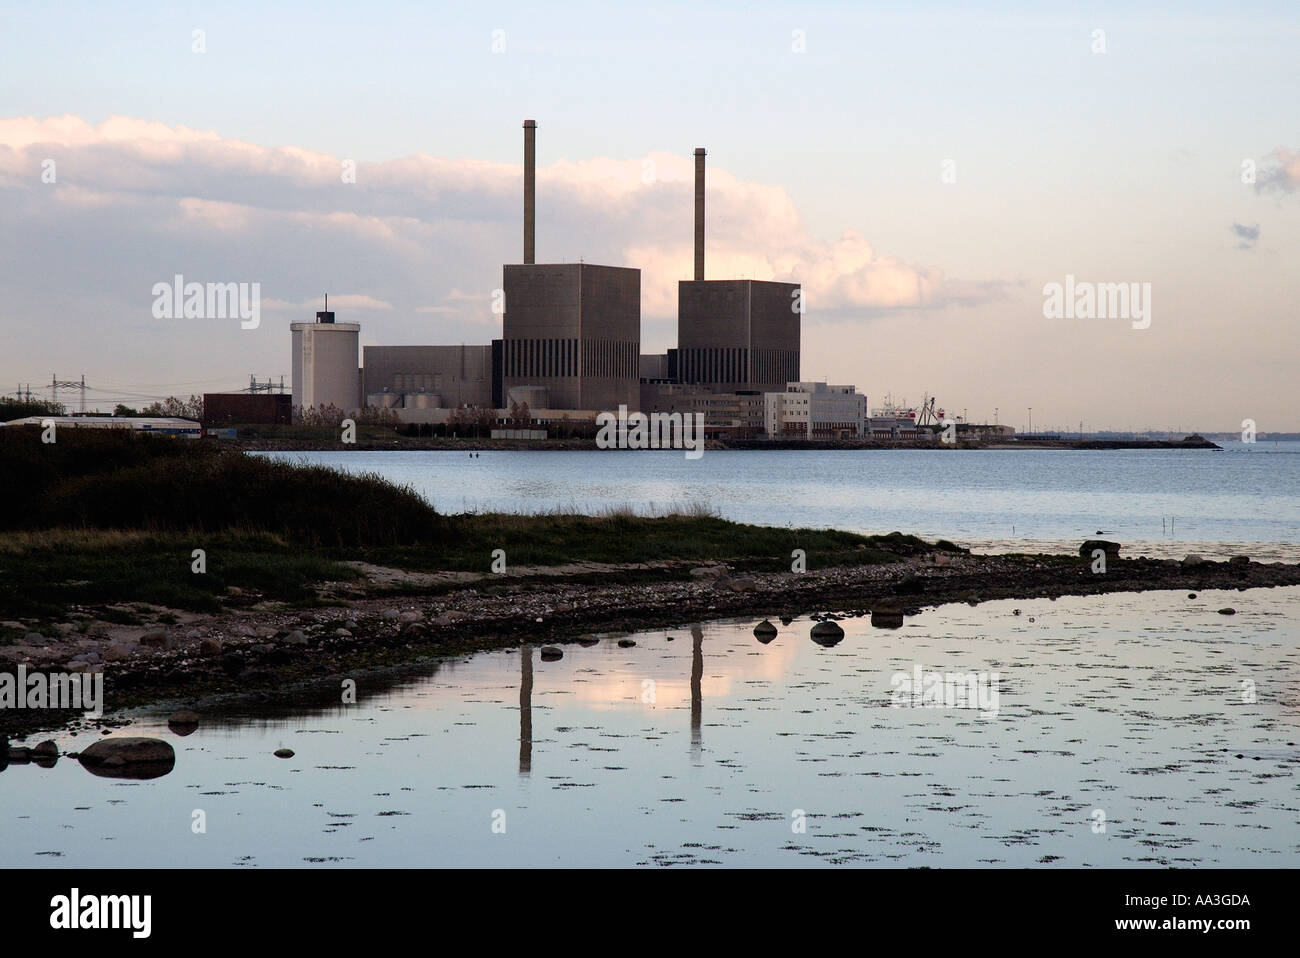 Barsebäck nuclear power plant in Sweden Stock Photo - Alamy